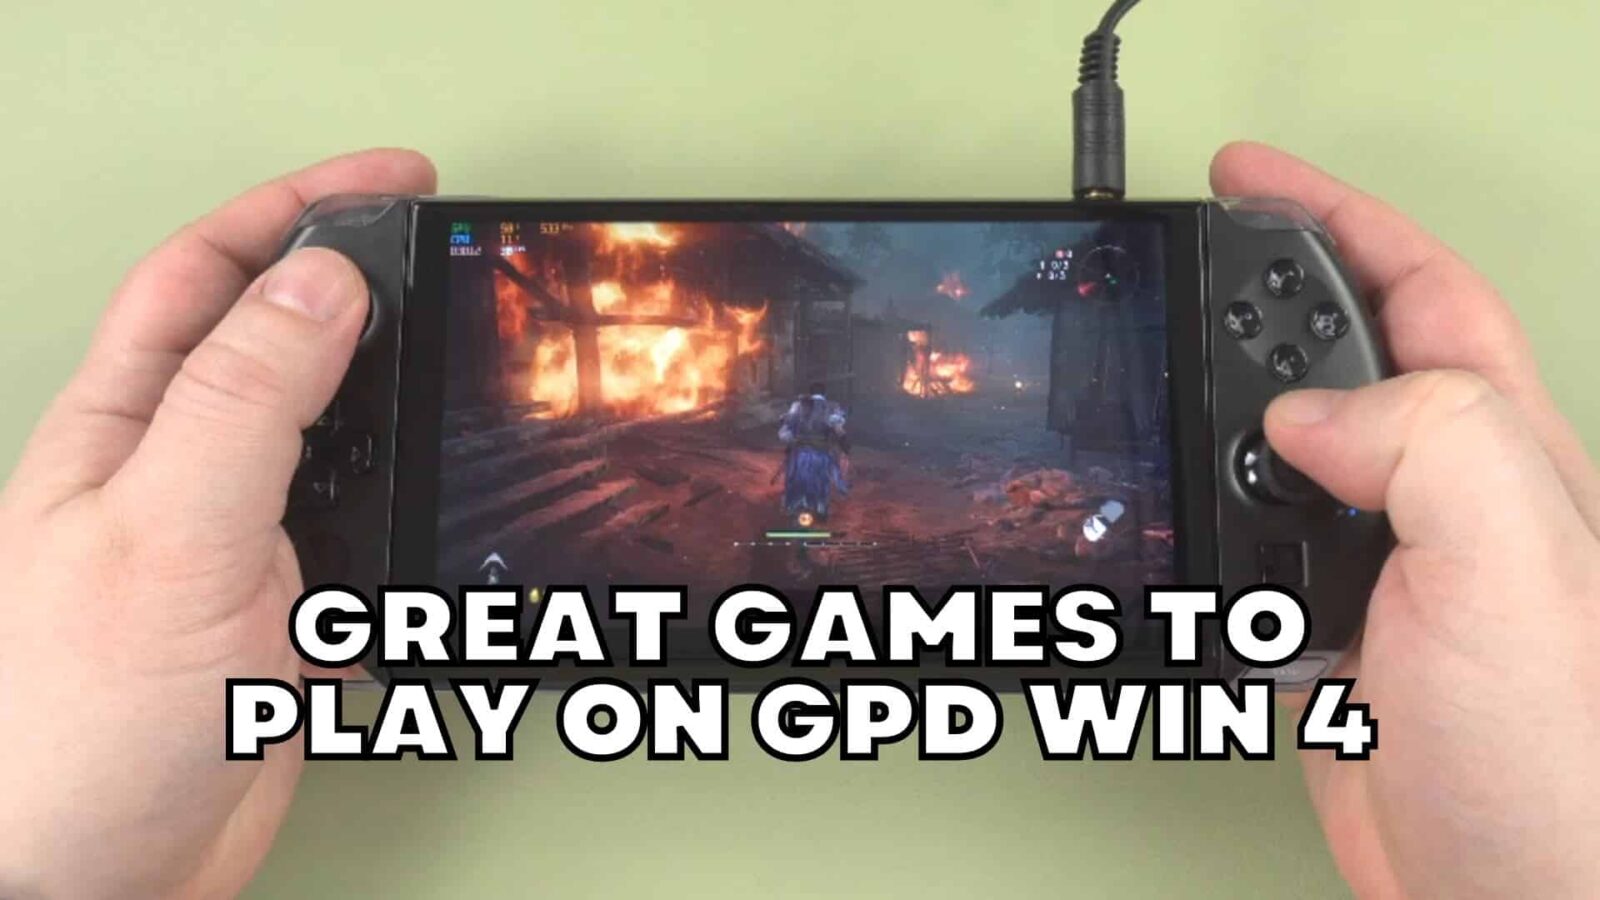 GPD WIN Game Pad Digital Ultra Mobile PC Windows